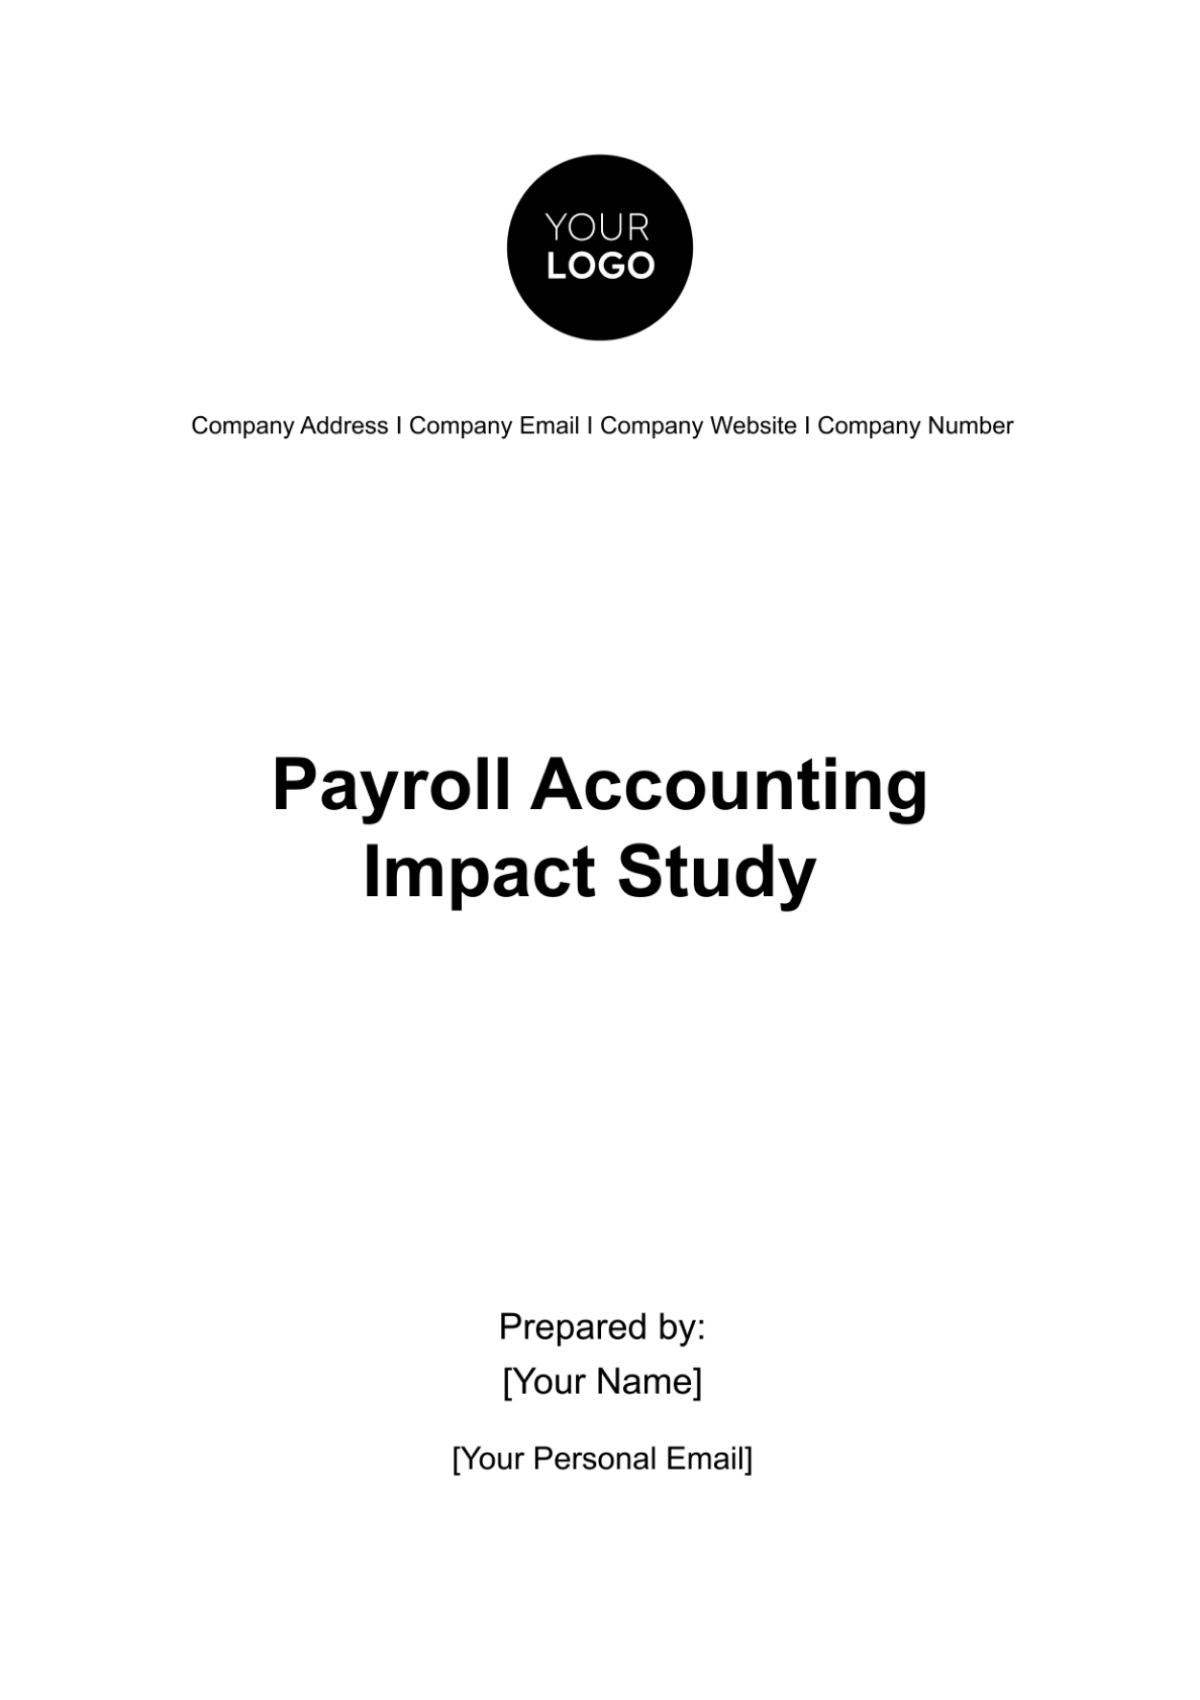 Payroll Accounting Impact Study Template